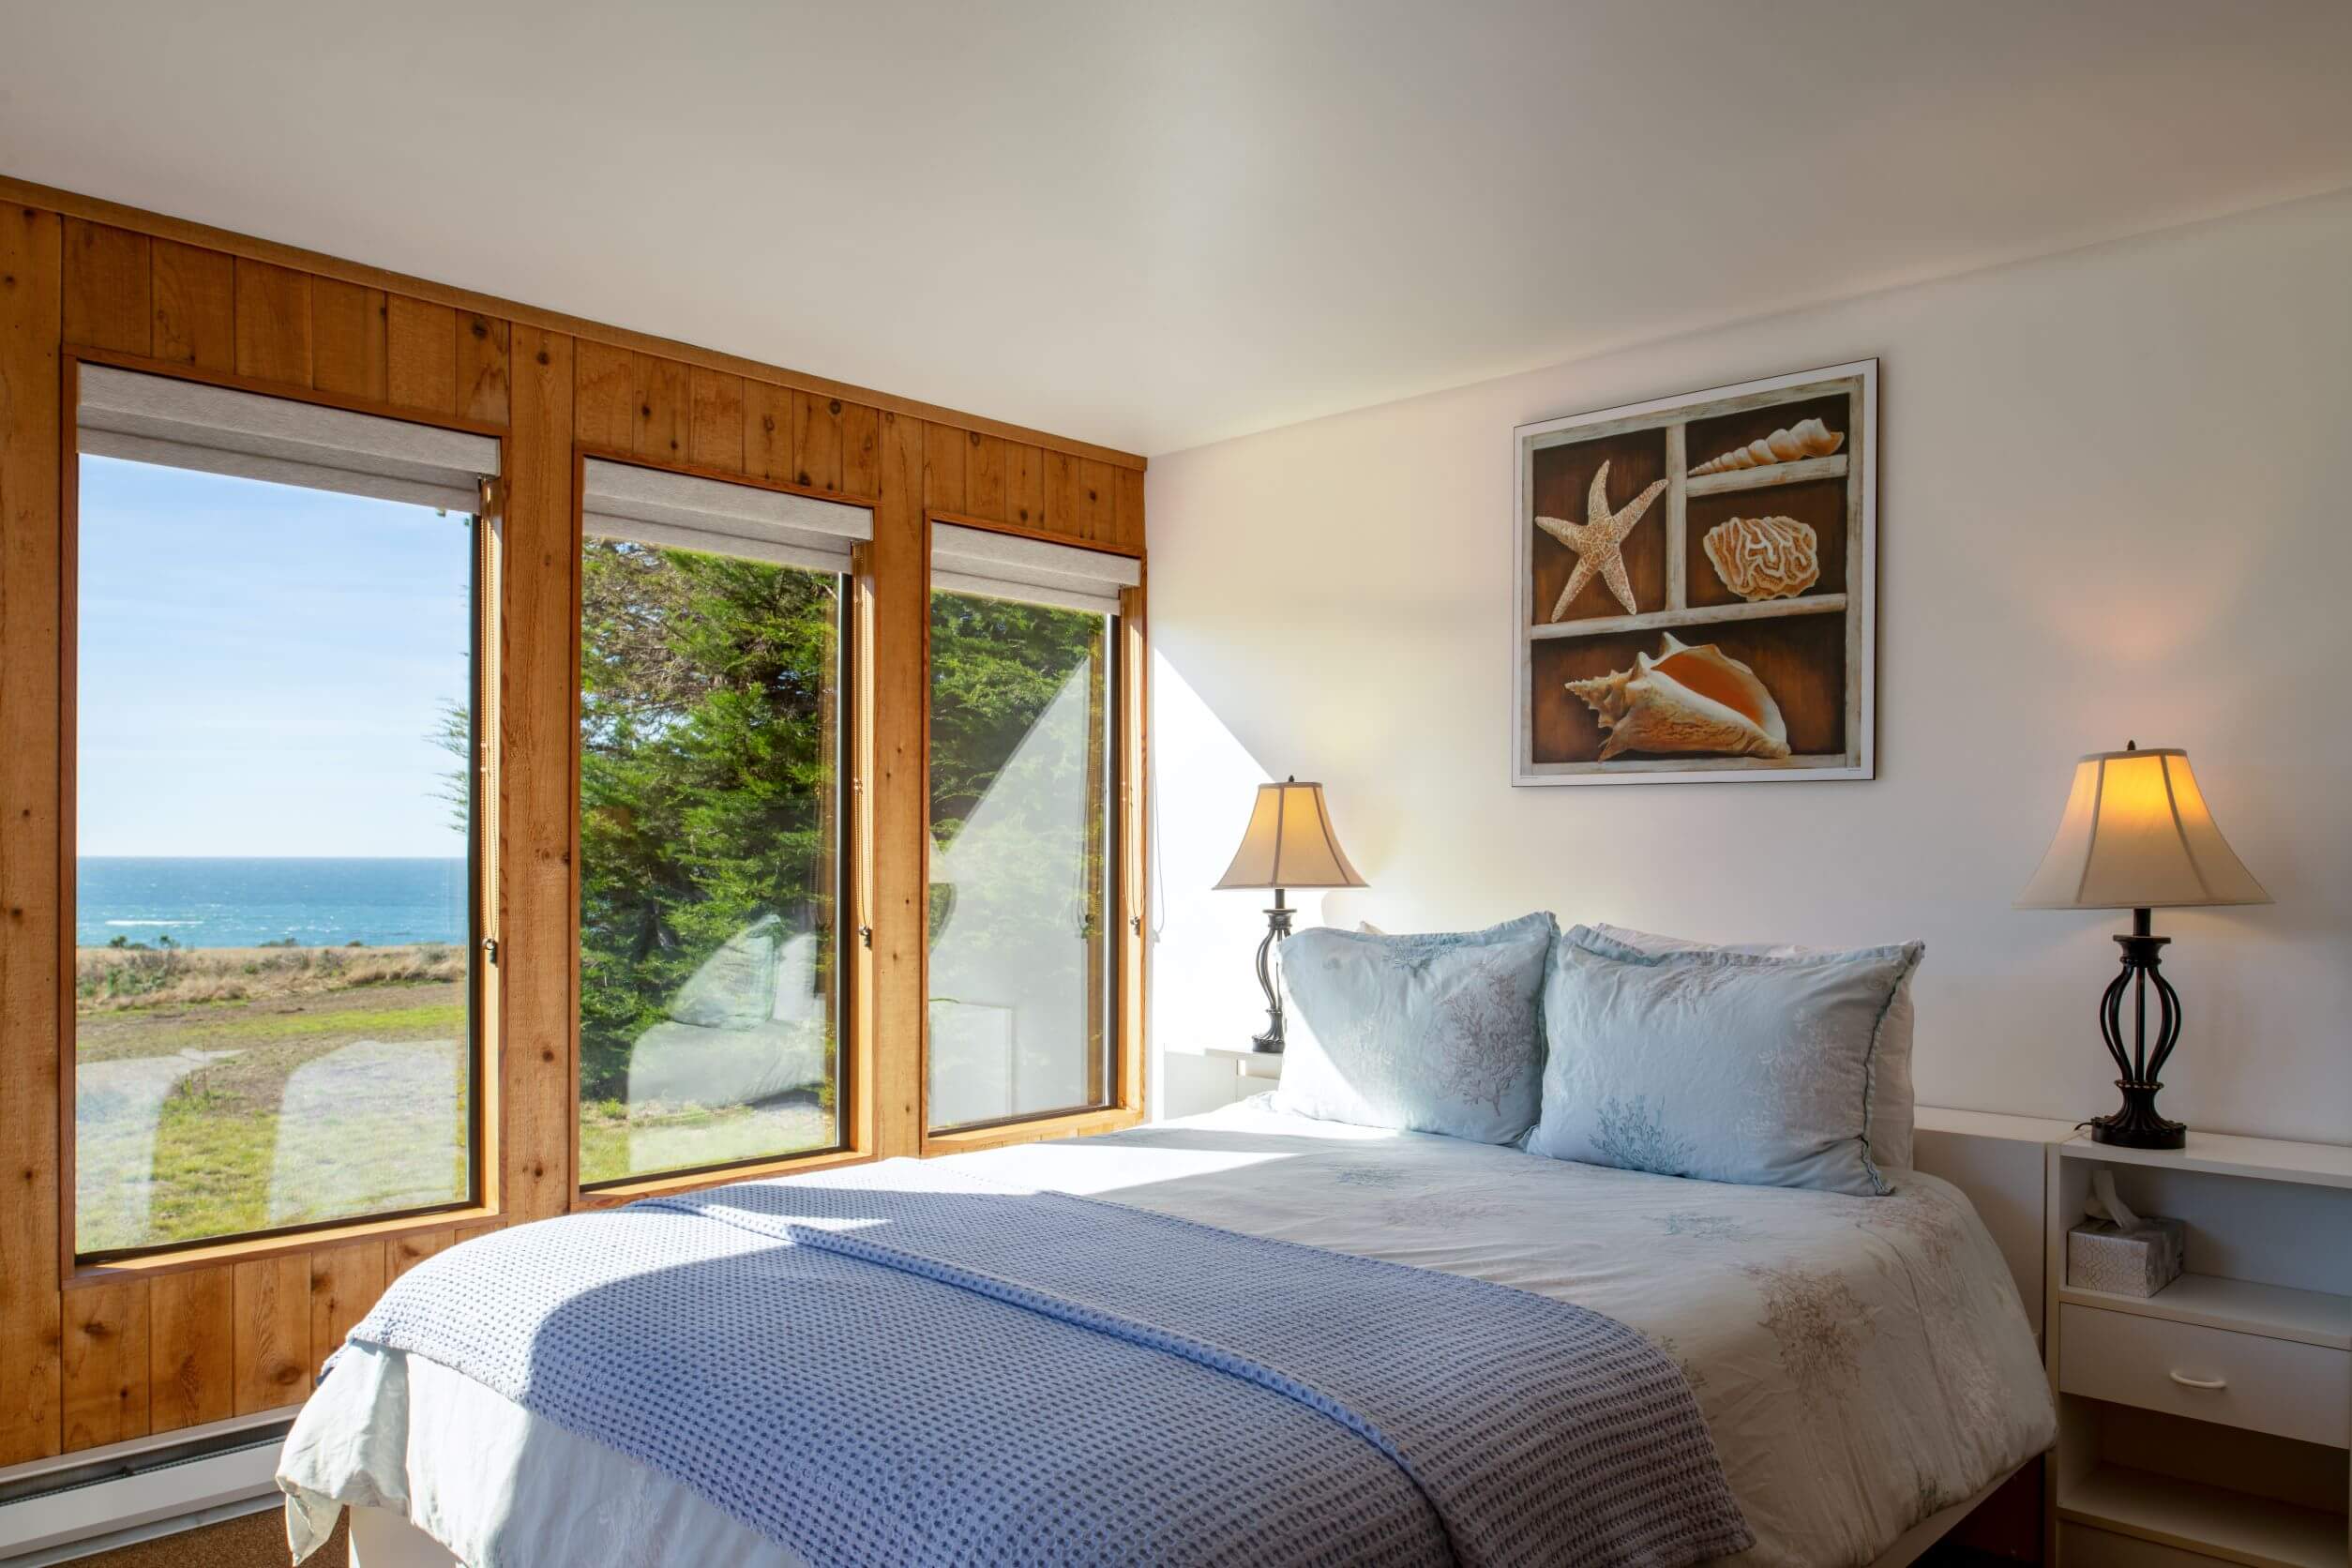 Lighthouse - bright queen bedroom with window view of ocean meadow